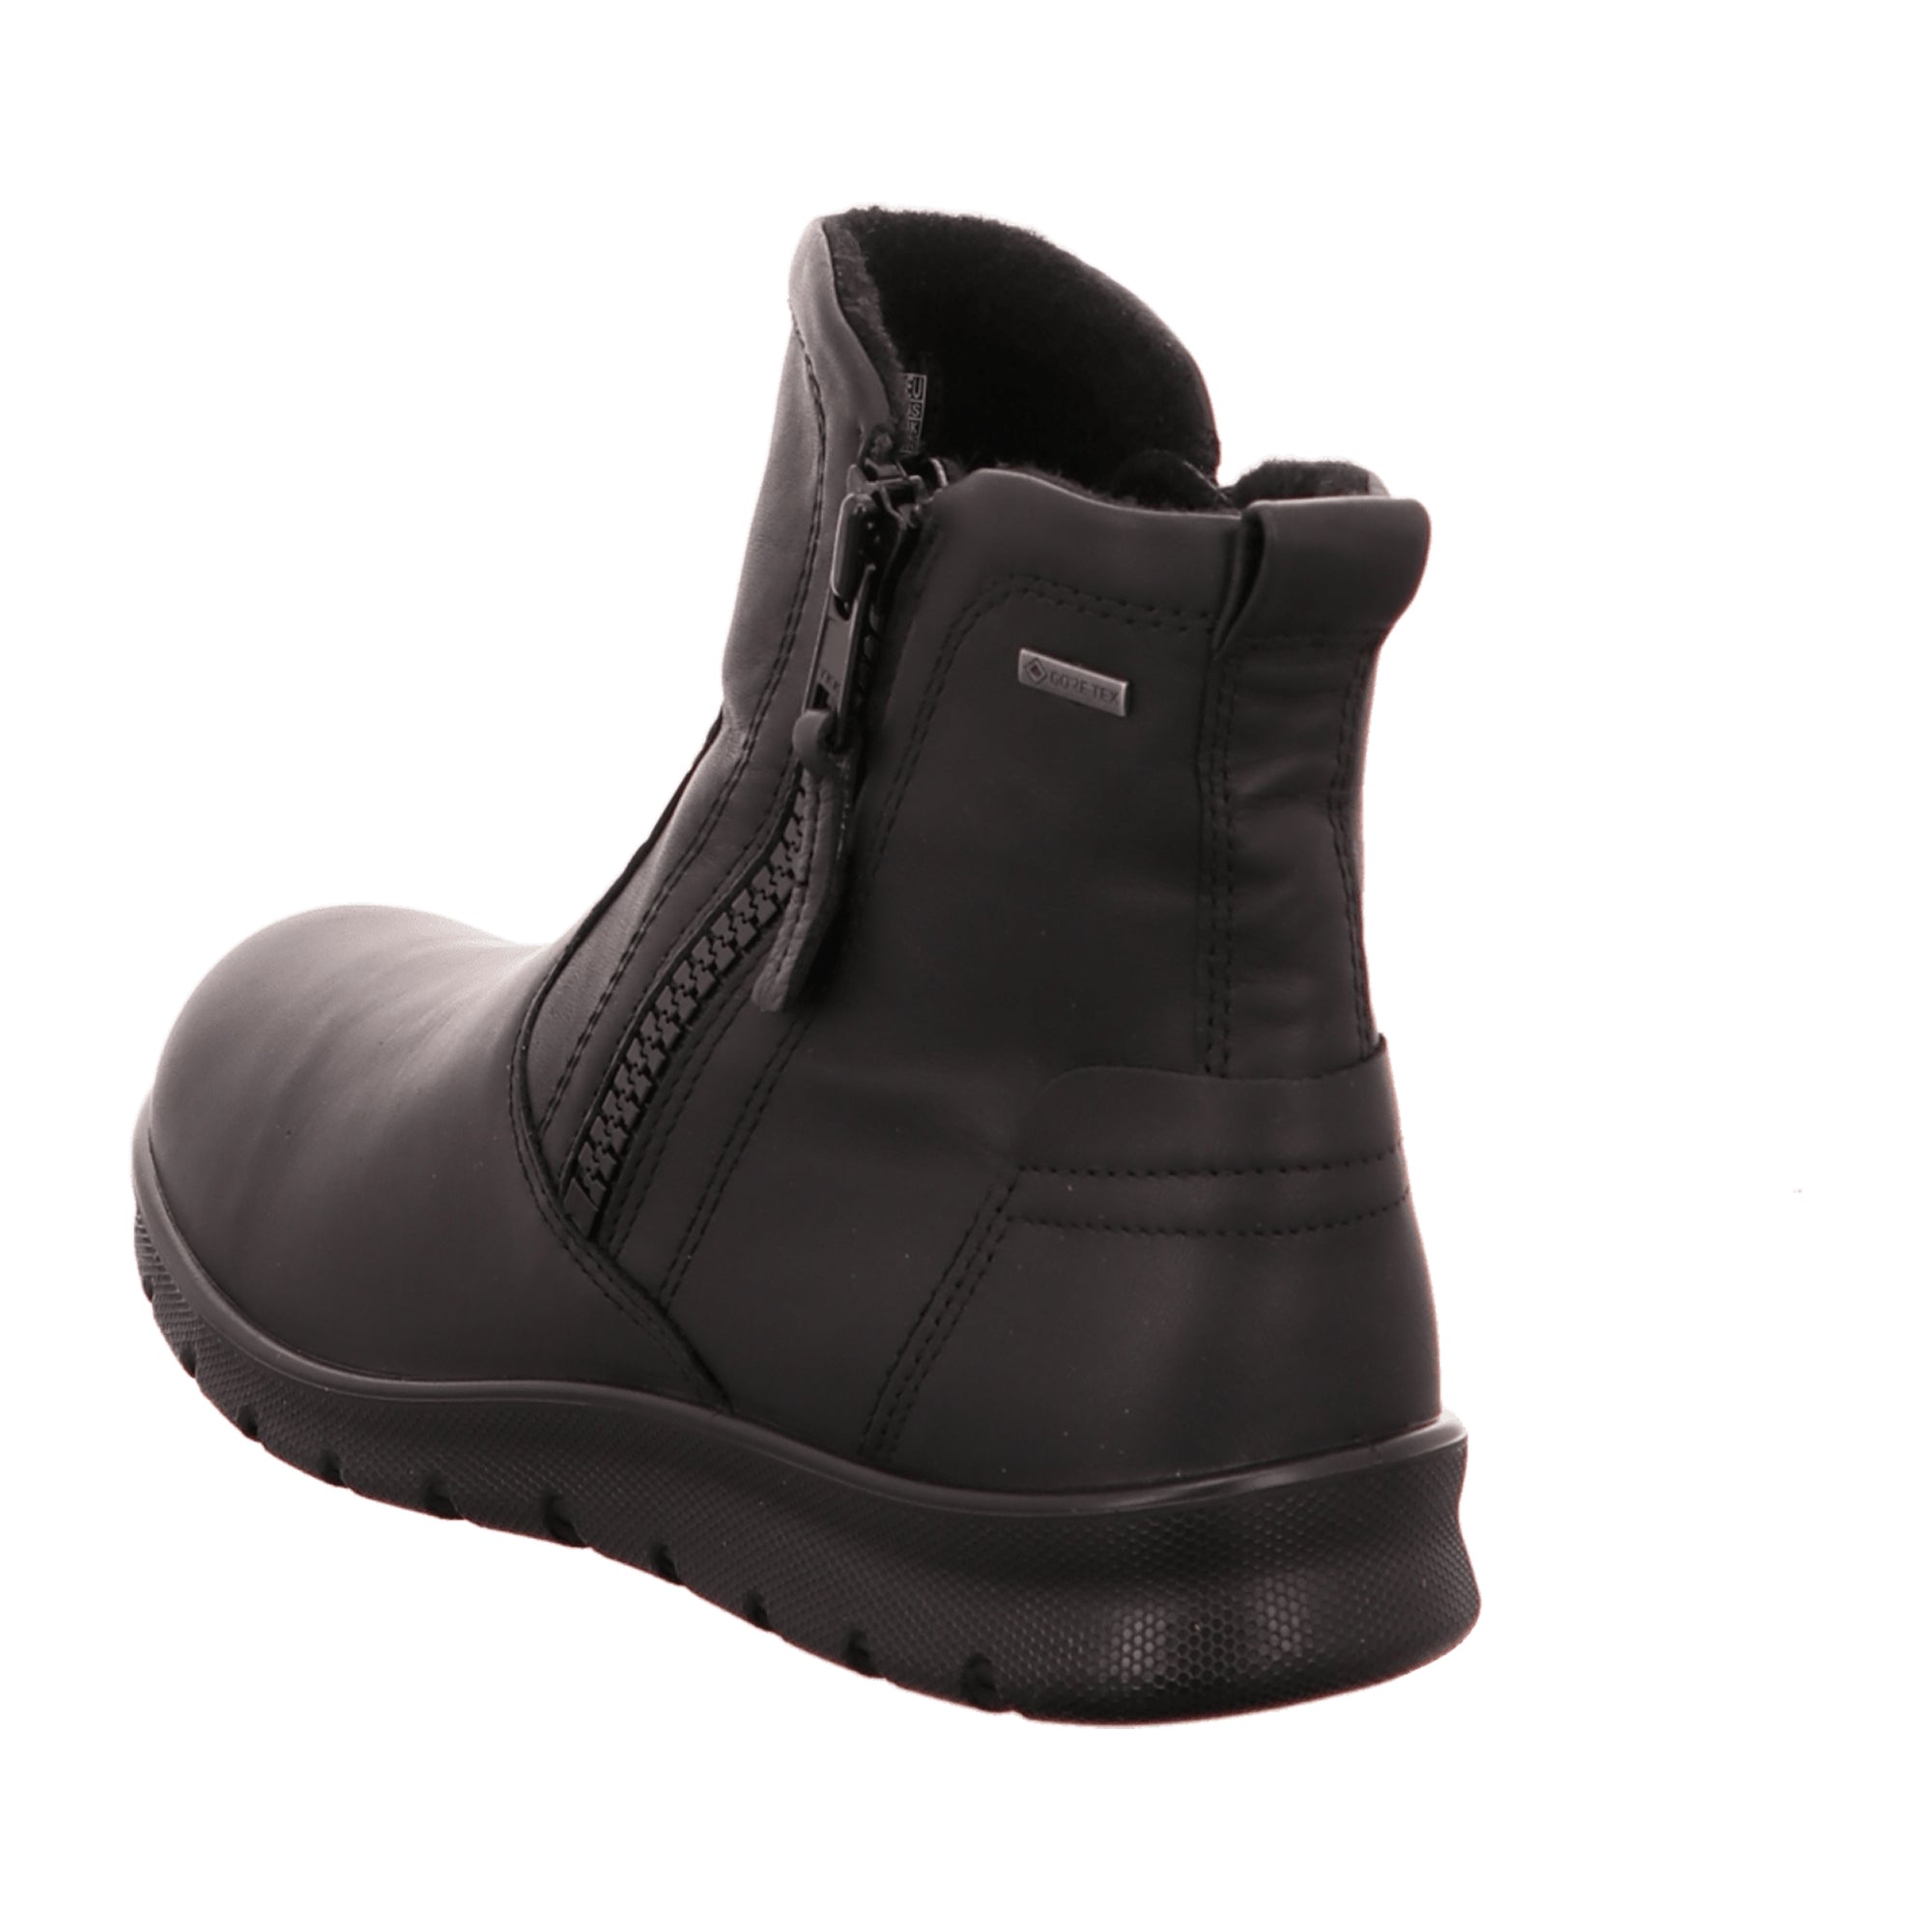 Ecco Babett Women's Boots - Durable & Stylish in Classic Black